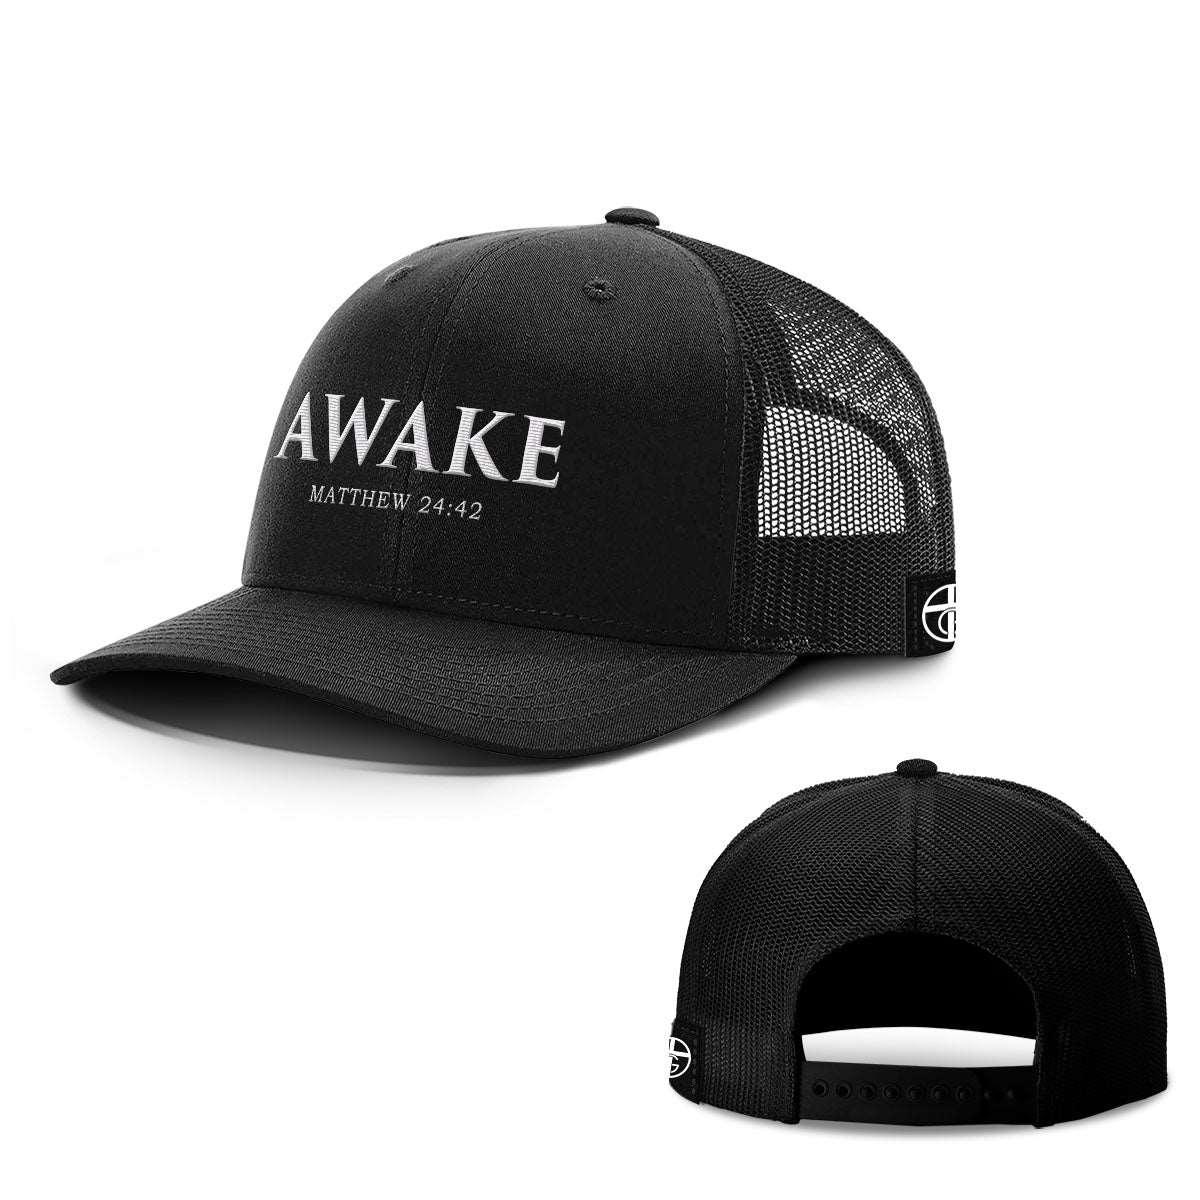 Awake Hats